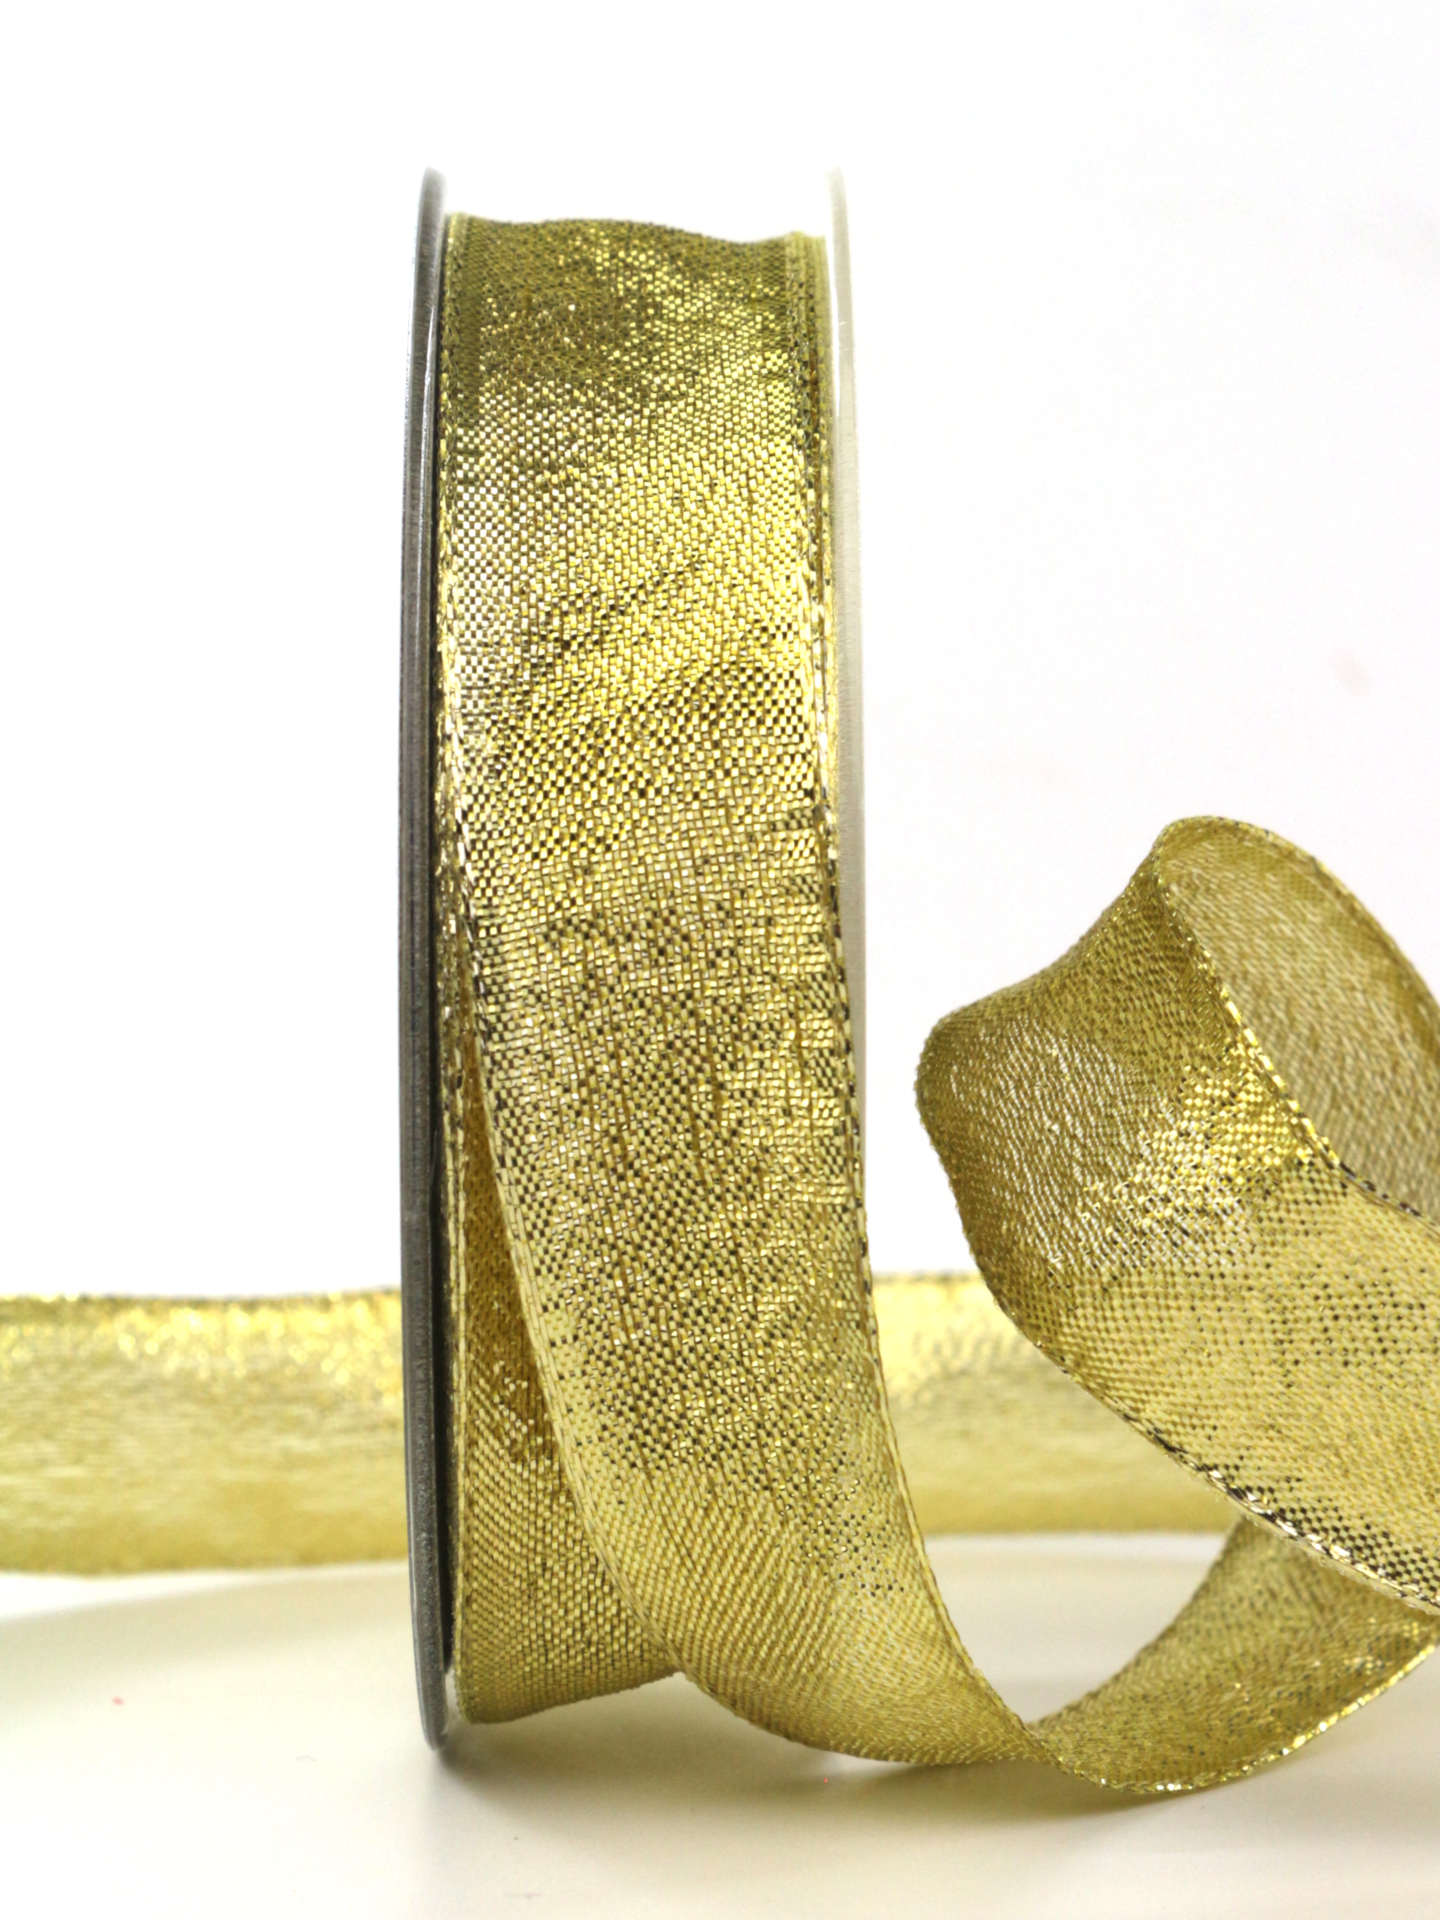 Goldband „Brokat“, gold, 25 mm breit, 25 m Rolle - weihnachtsband, geschenkband-weihnachten, weihnachtsbaender, geschenkband-weihnachten-dauersortiment